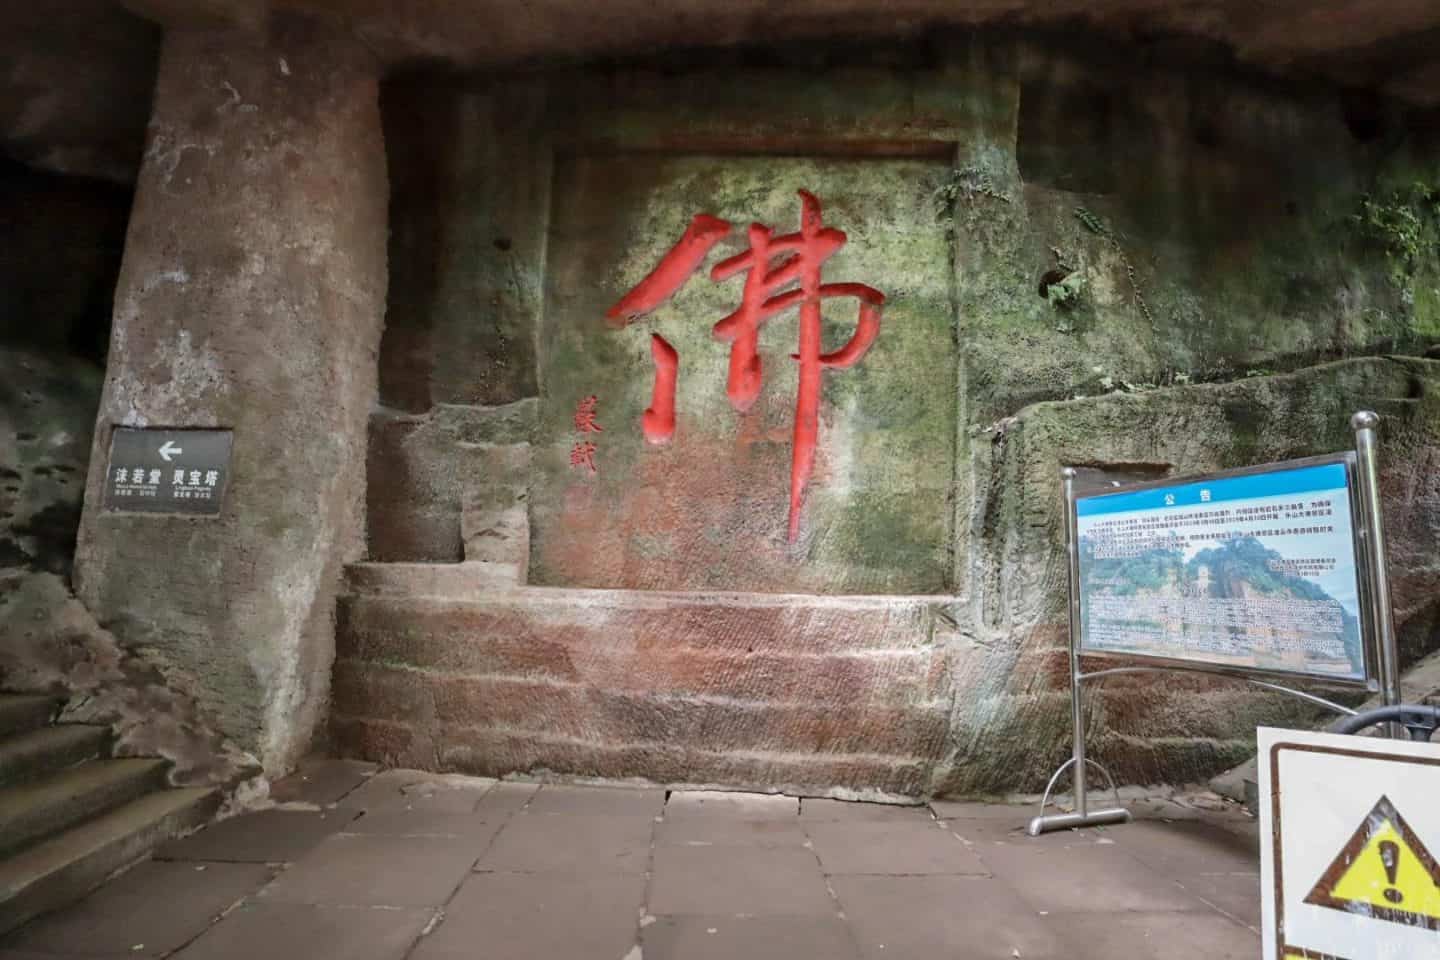 Leshan Buddha from Chengdu, Tourist centre